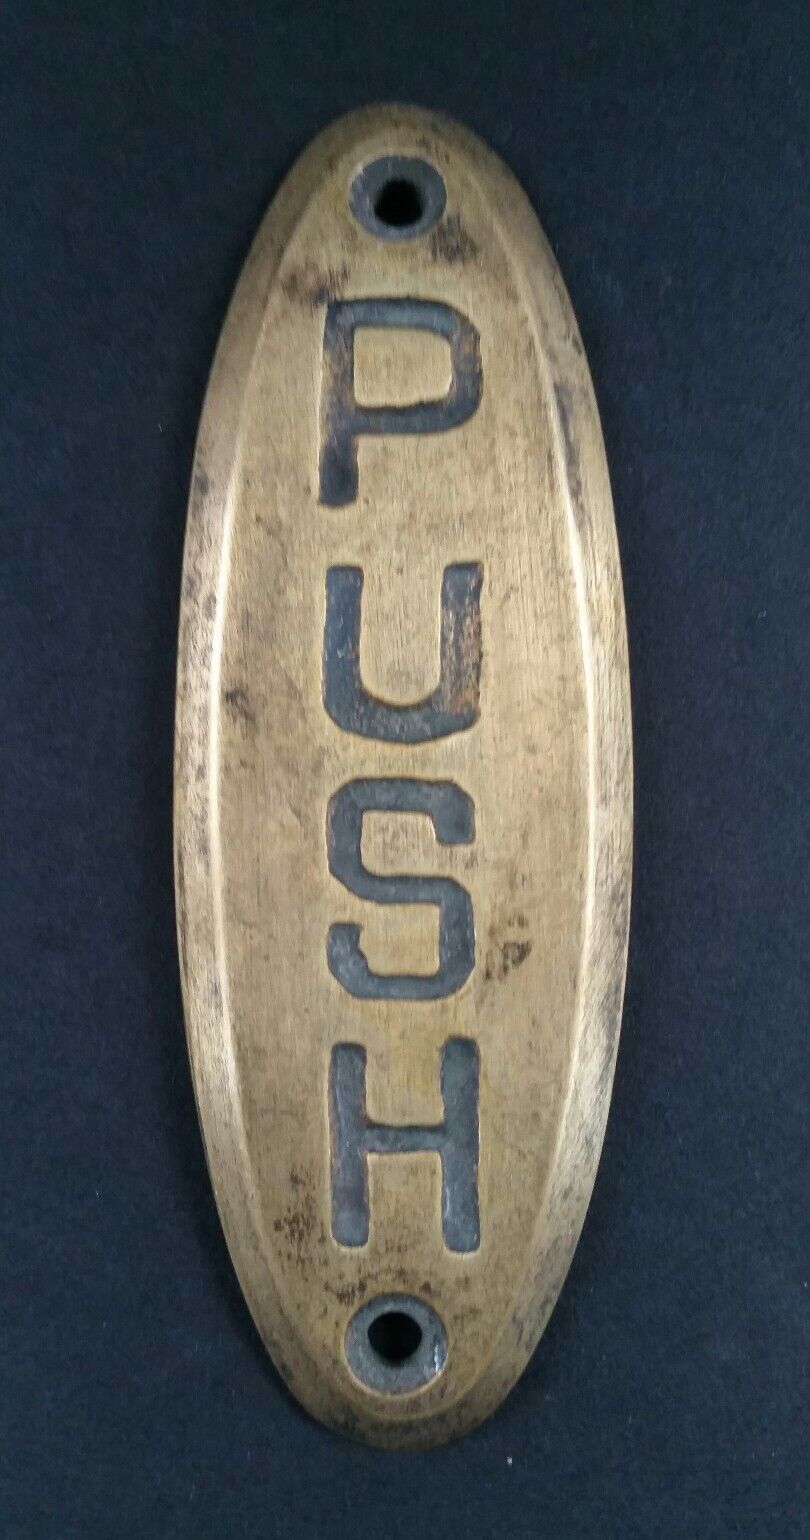 PUSH Door or Bell sign Antique Original Reclaim Art Deco Solid Brass 4" #F6